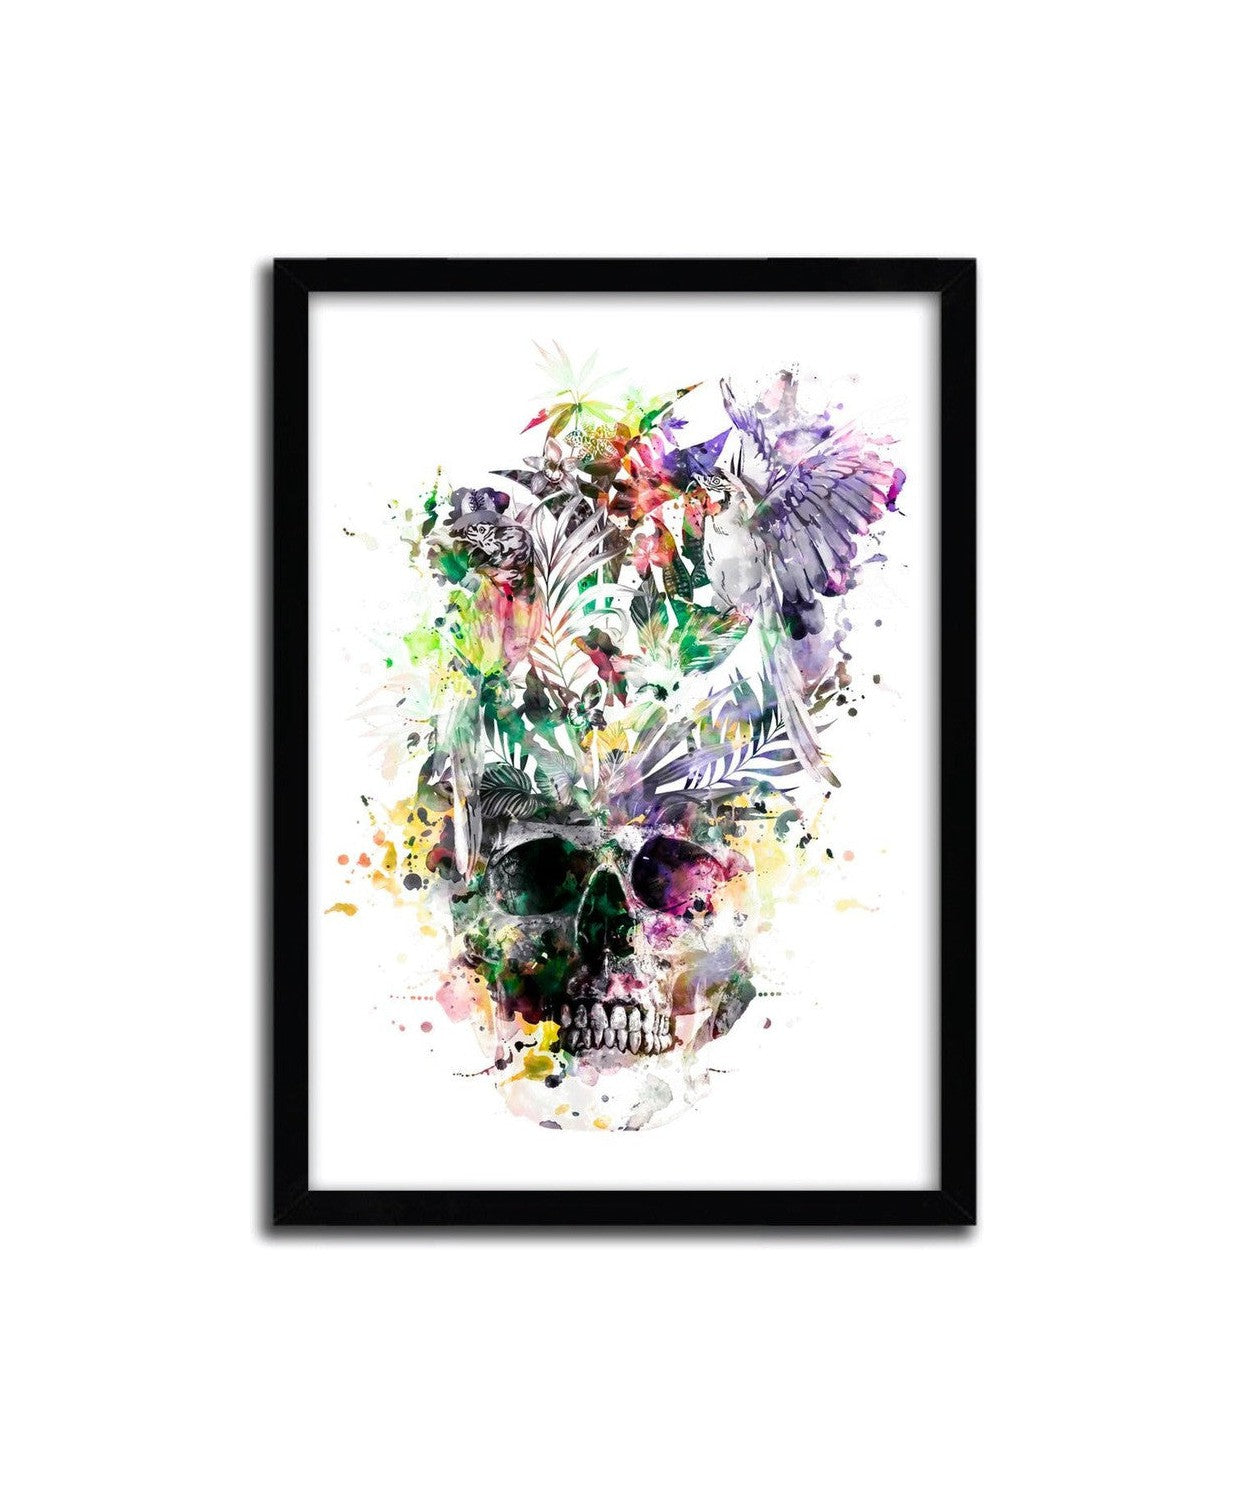 Affiche Skull Interrots Par Riza Peker